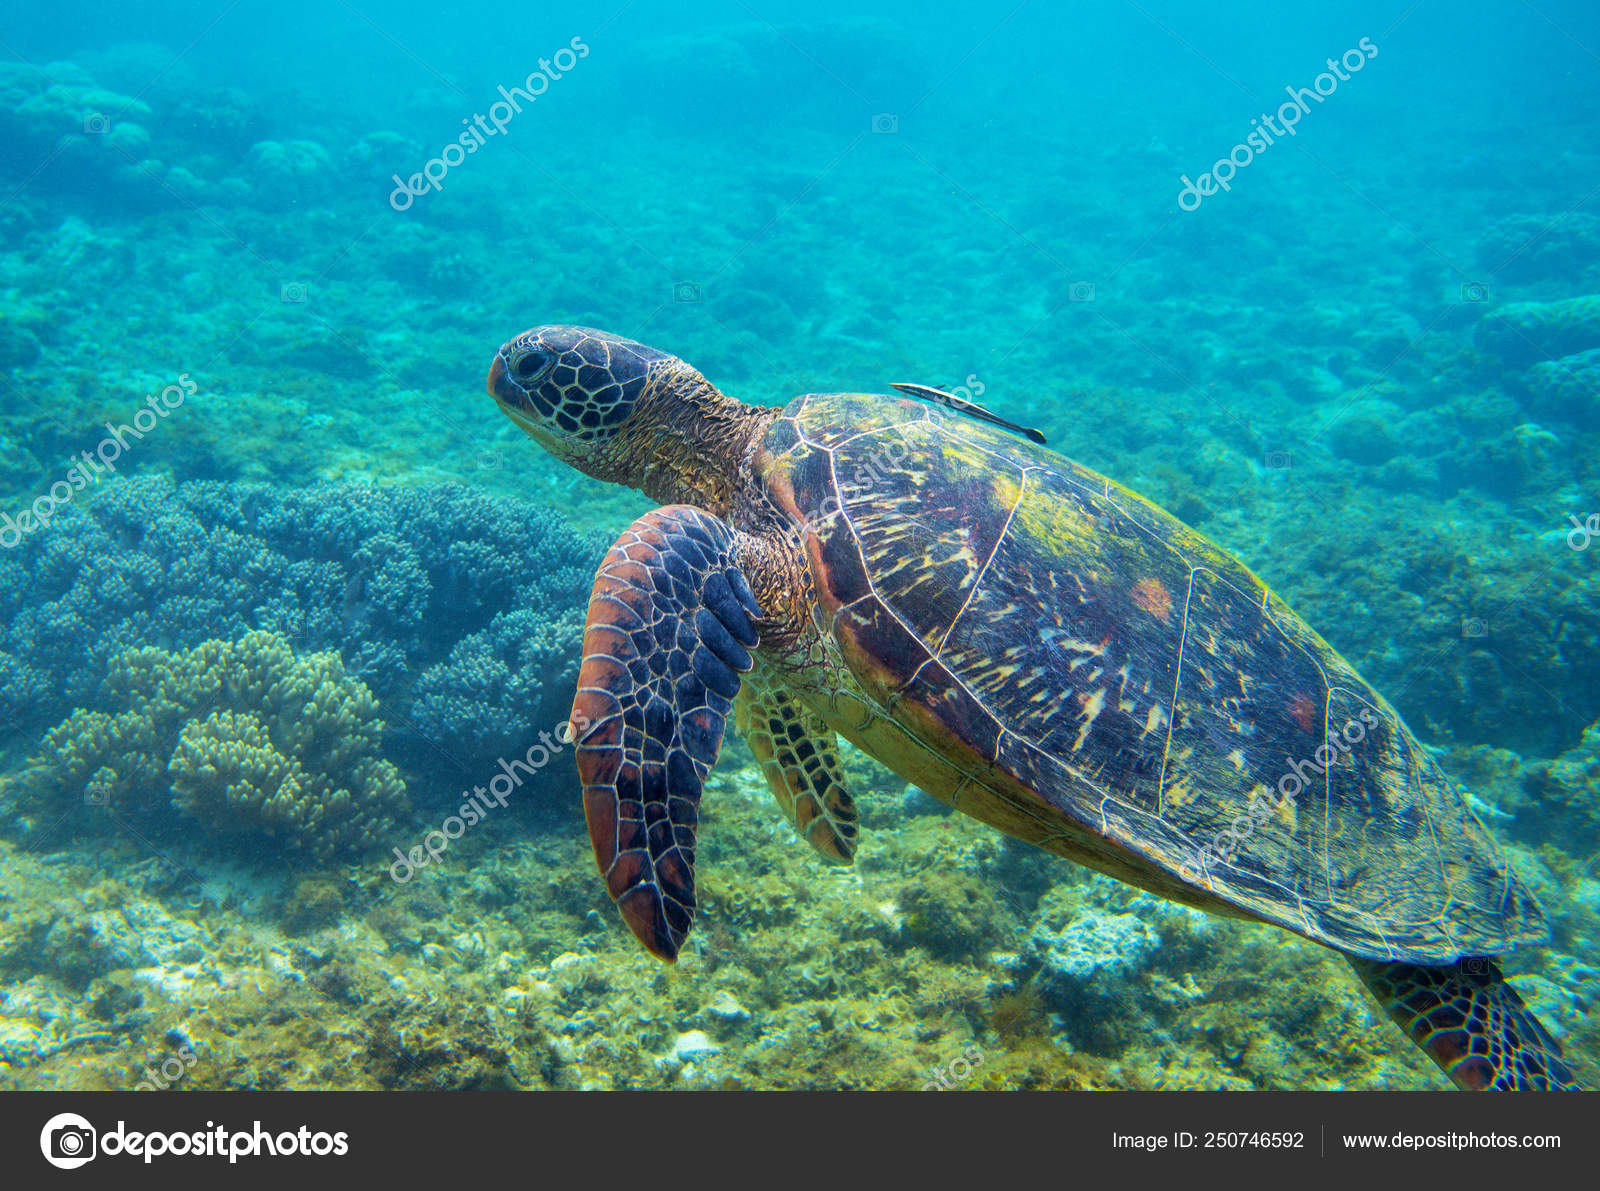 Sea Turtle Swims in The Ocean.Illustration of Tropical Underwater World.Aquarium Fish,Ladies Full Zip Fleece with Pocket S